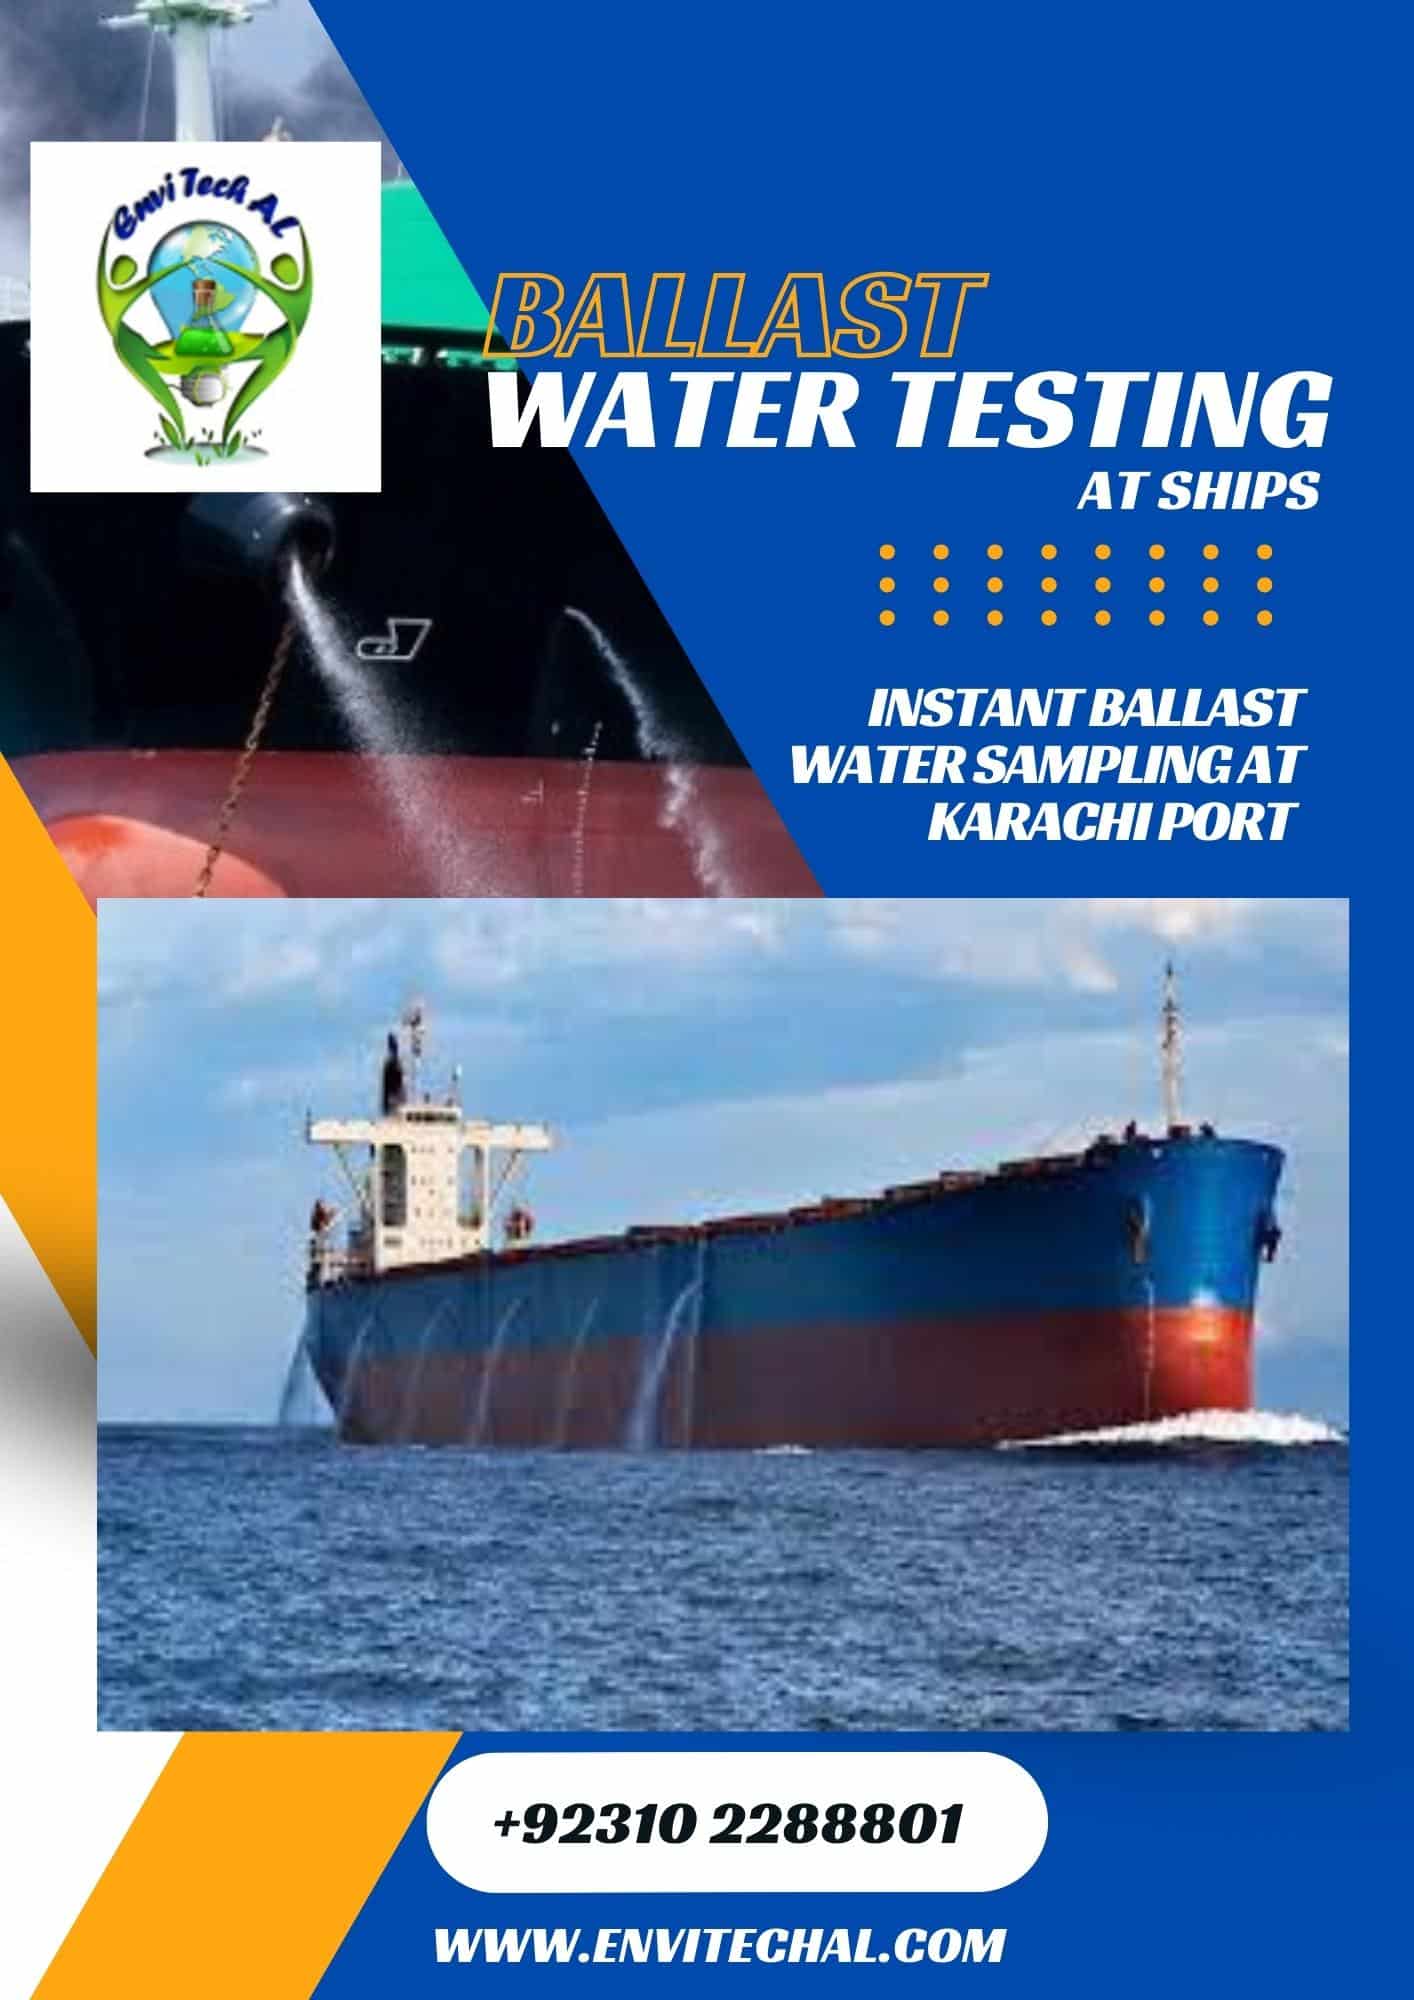 Ballast water testing